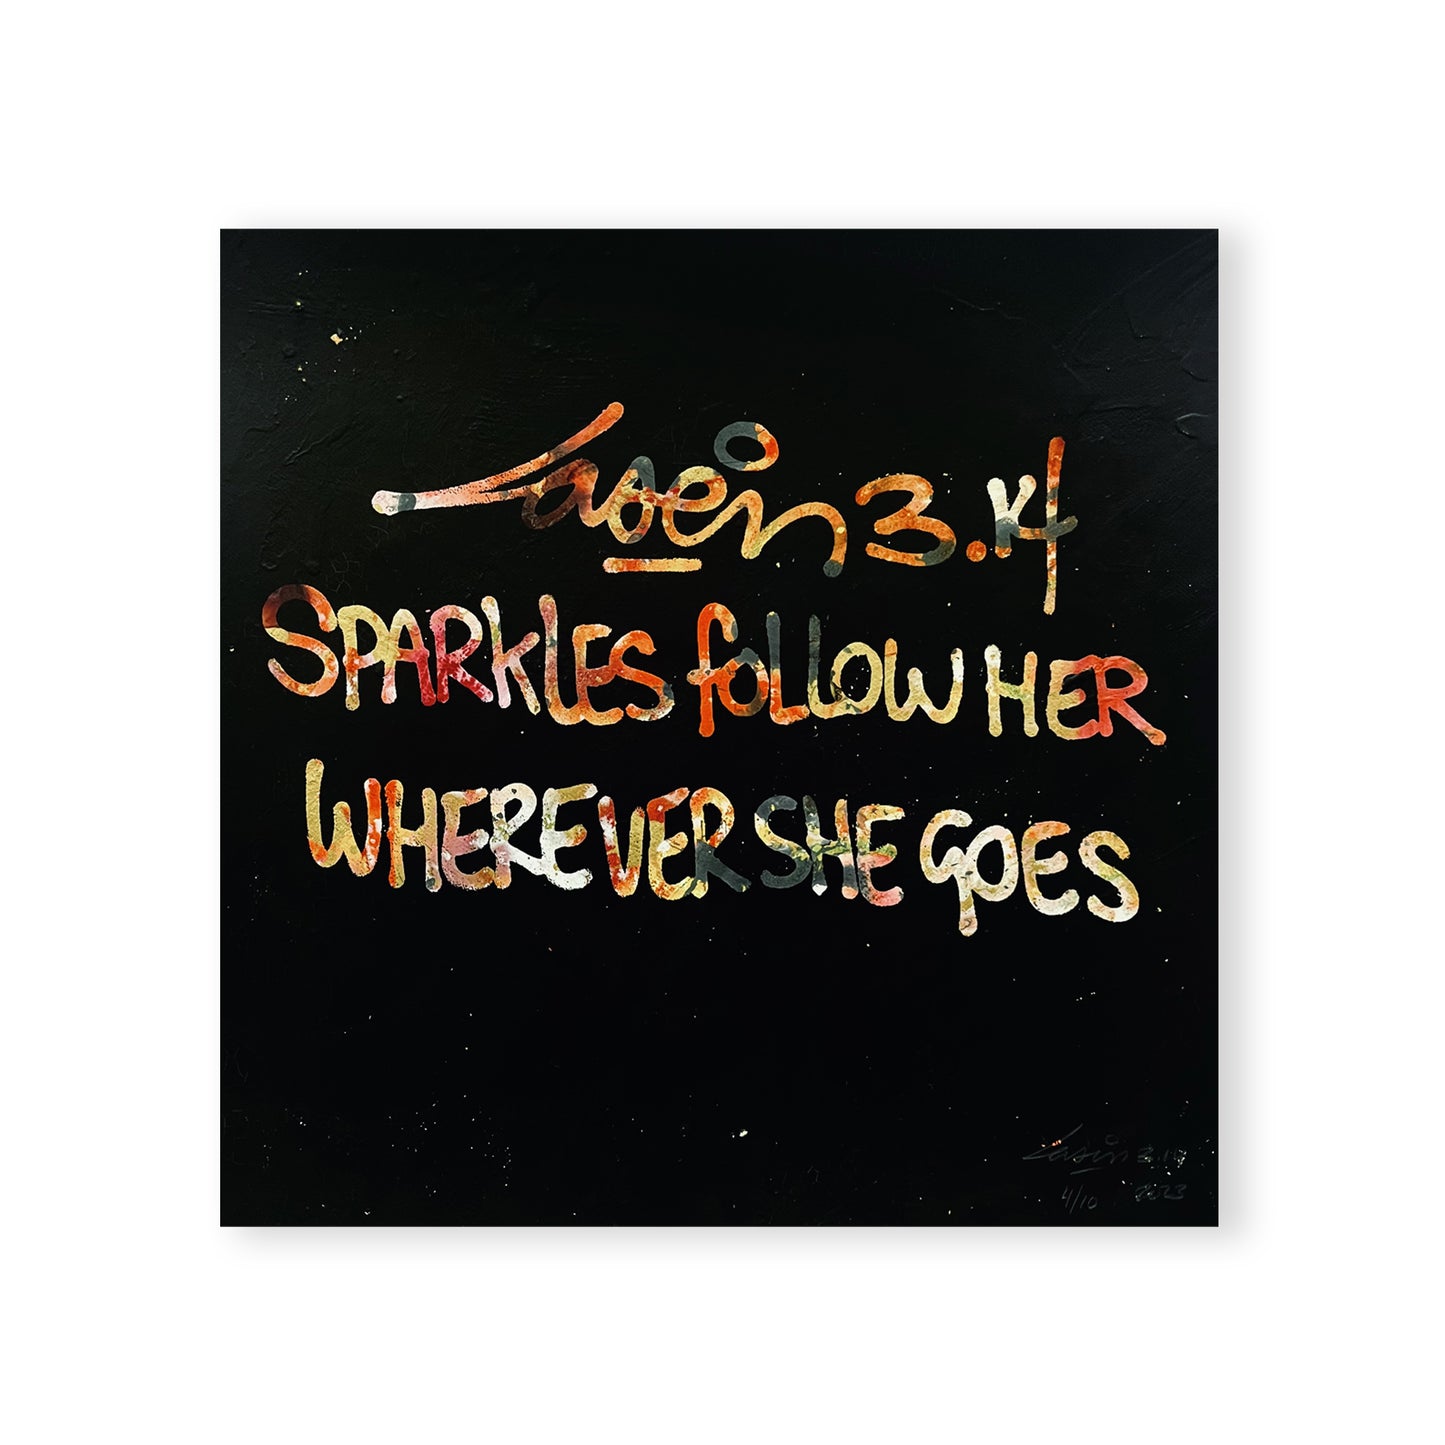 Sparkles Follow Her Wherever She Goes 4/11